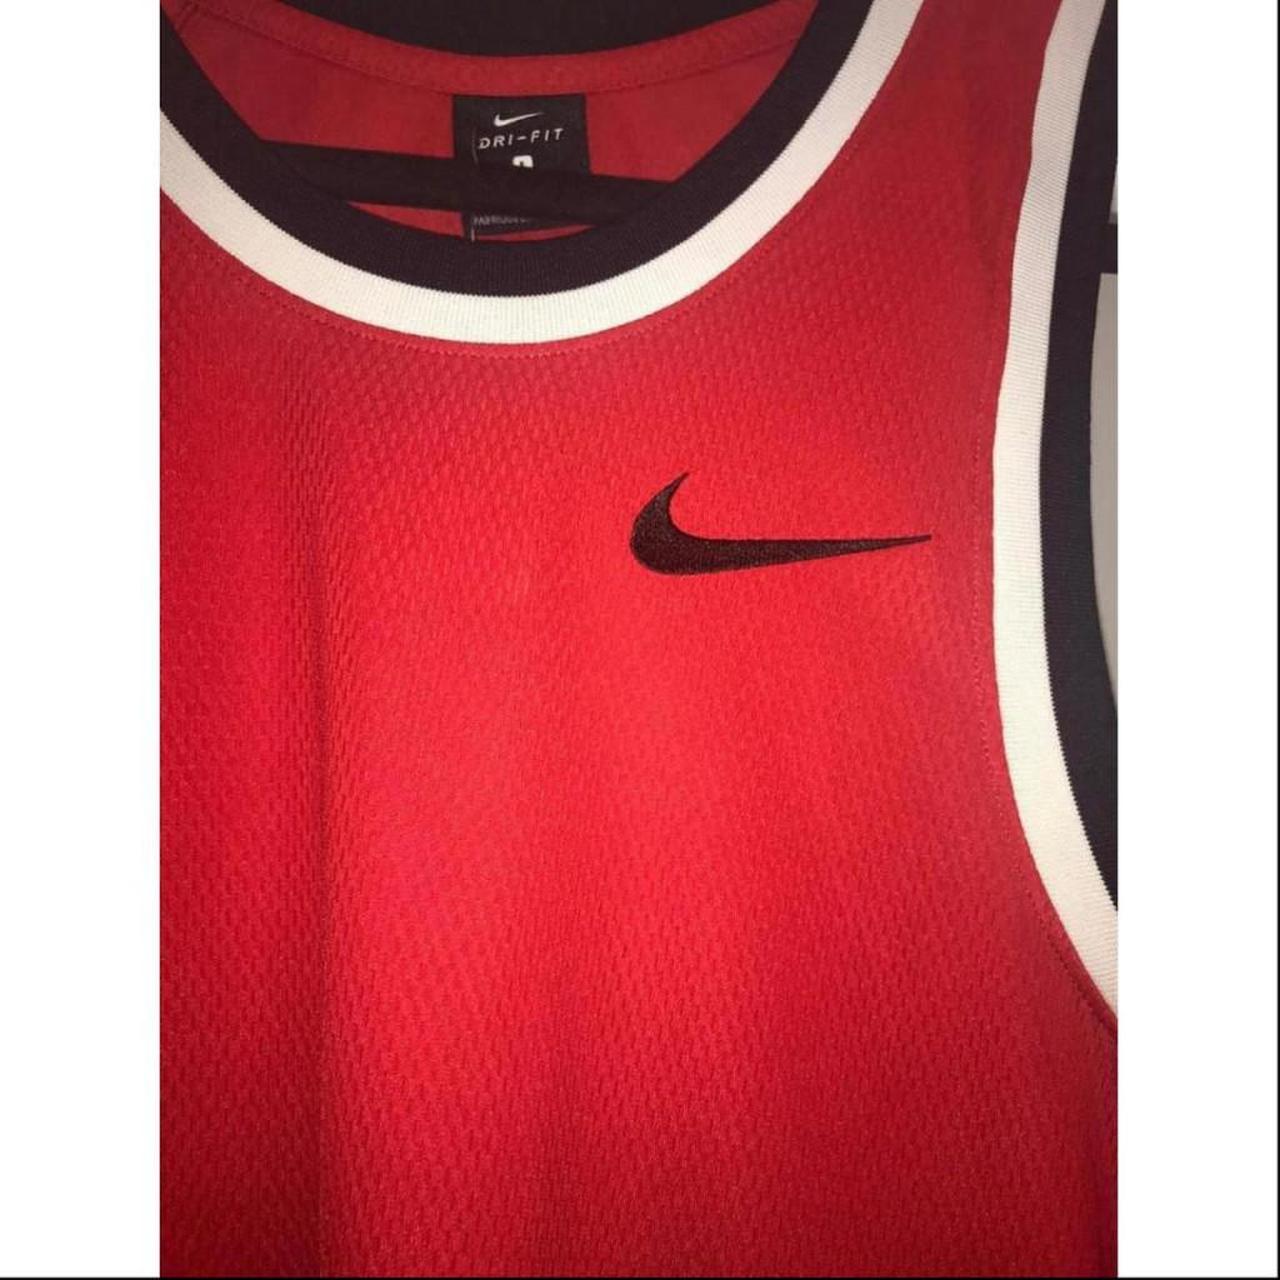 Nike x Supreme NBA jersey - Size Large - Black - - Depop